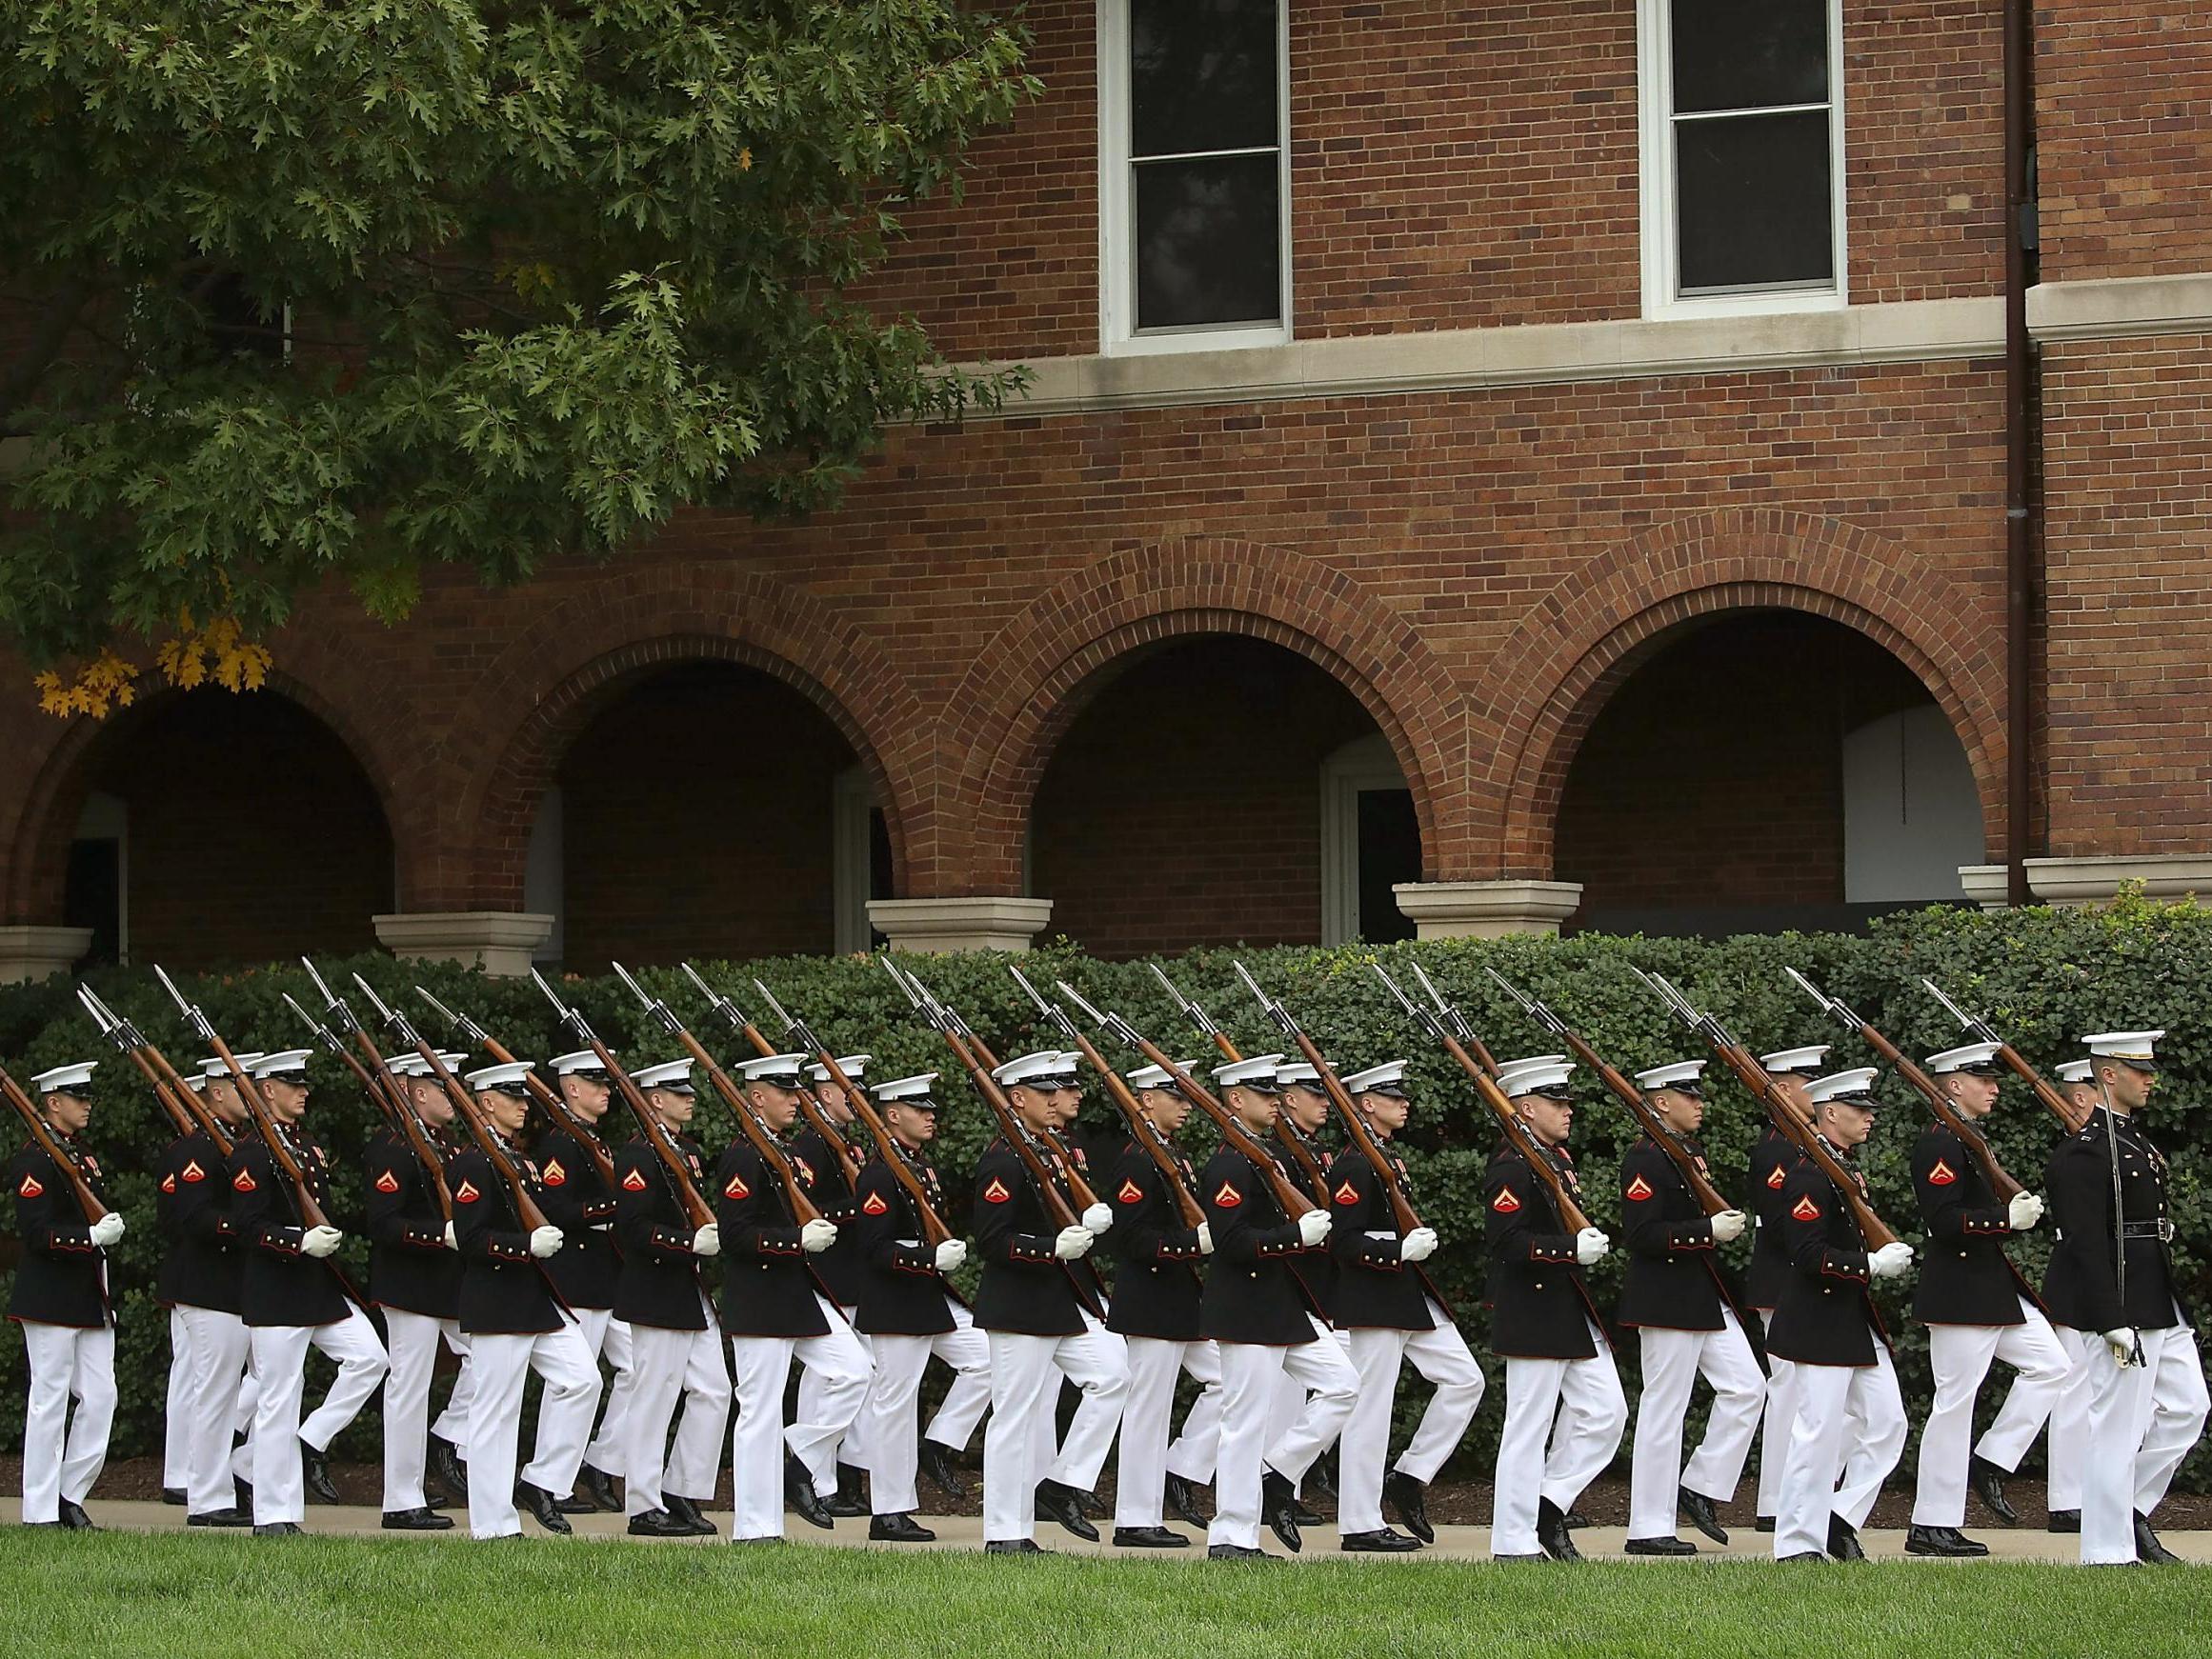 Pictured: Marine barracks on 23 October 2017 in Washington